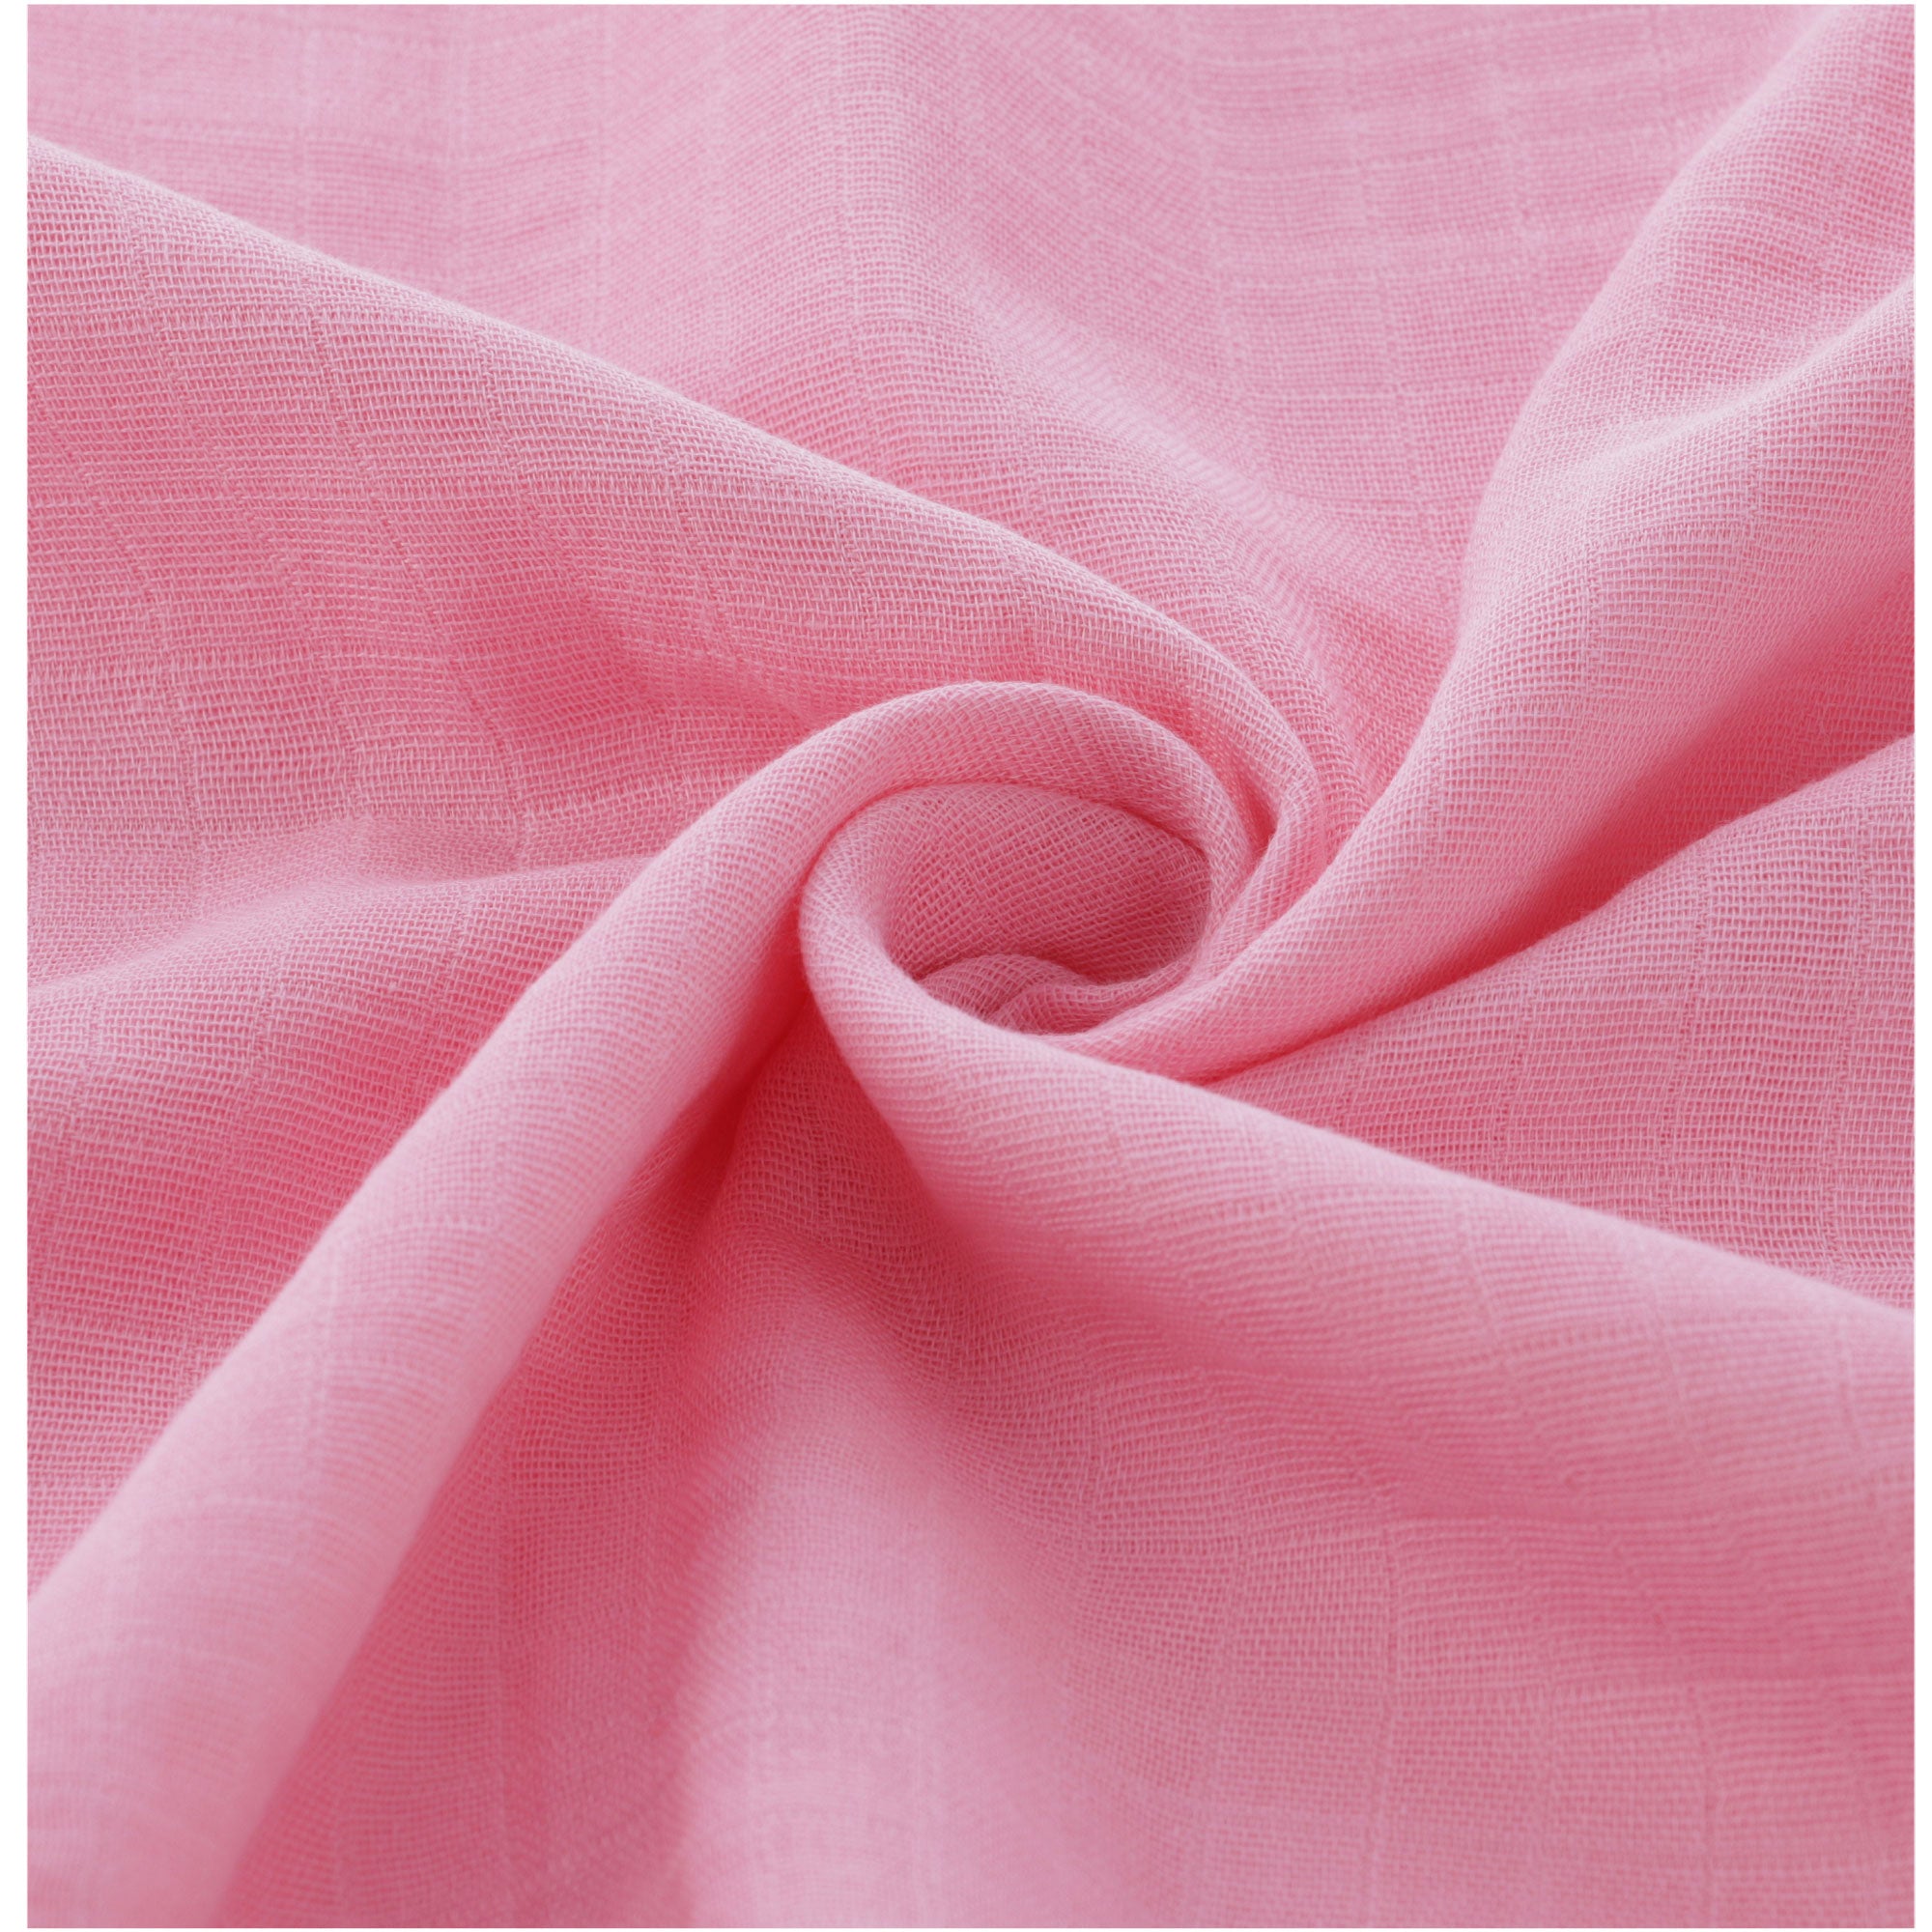 FH-07054 - 2PK Muslin Swaddle Blanket 47" x 47" - Floral & Rosette